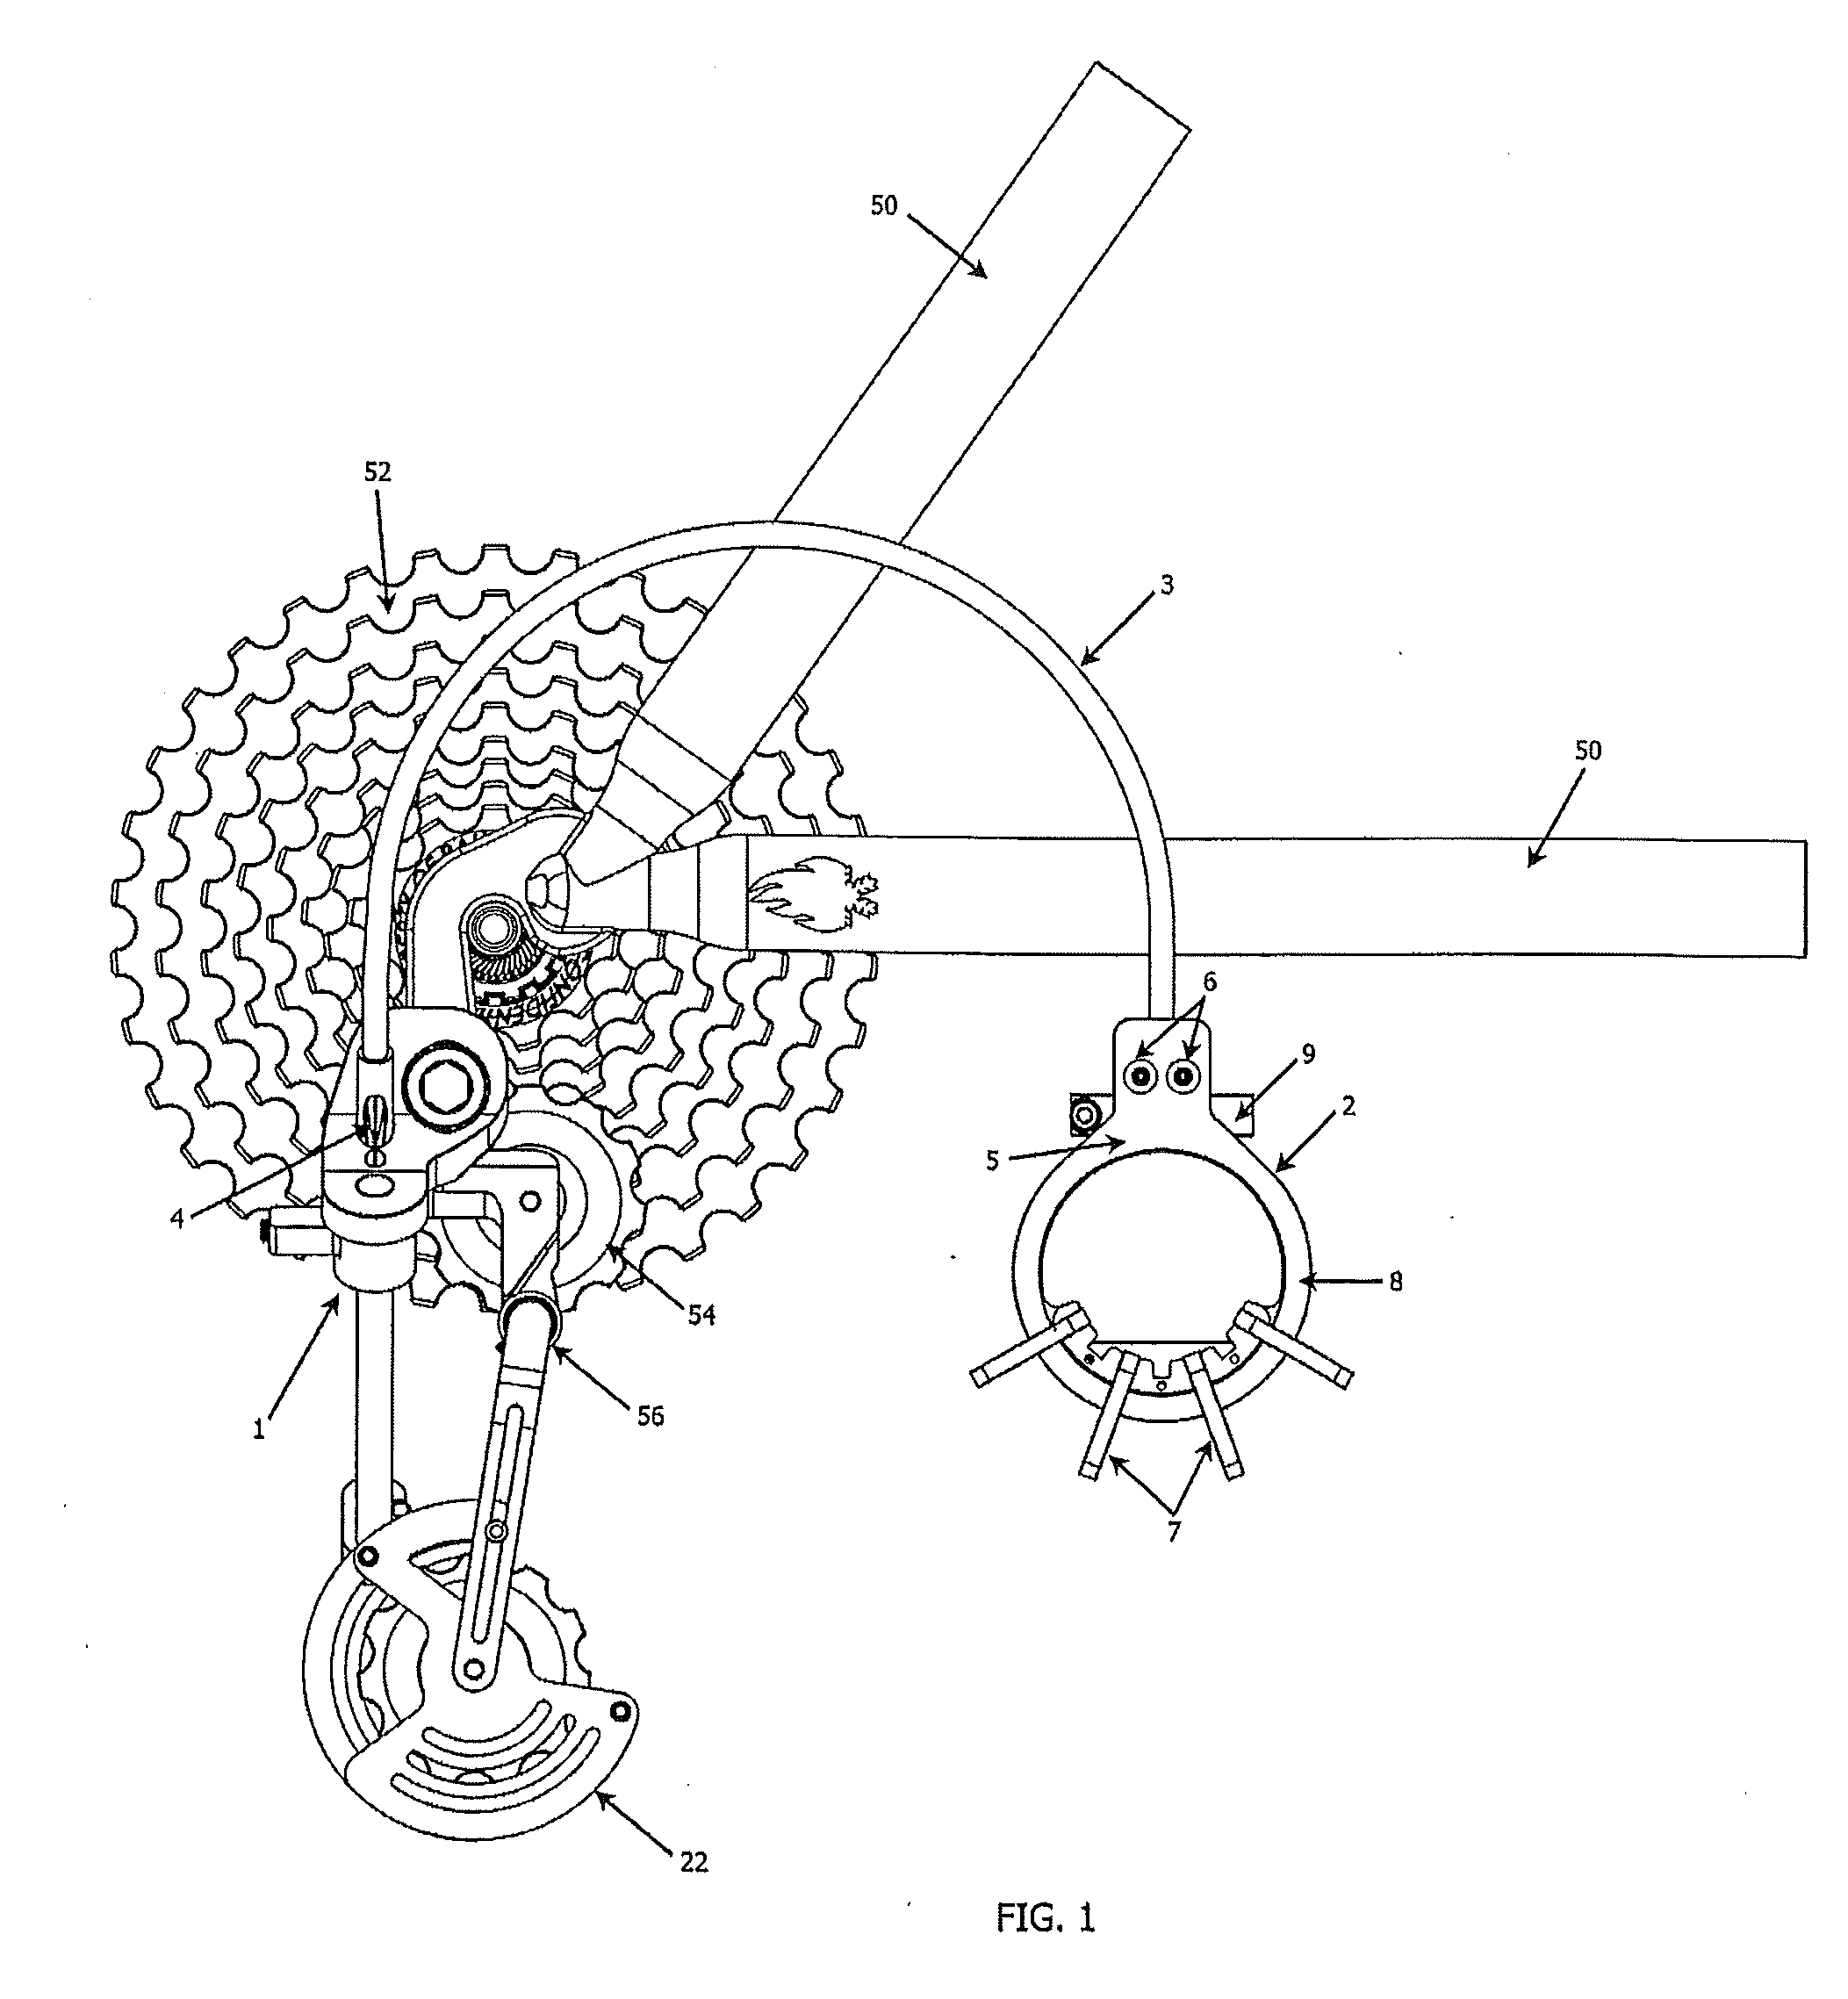 Gear transmission and derrailleur system